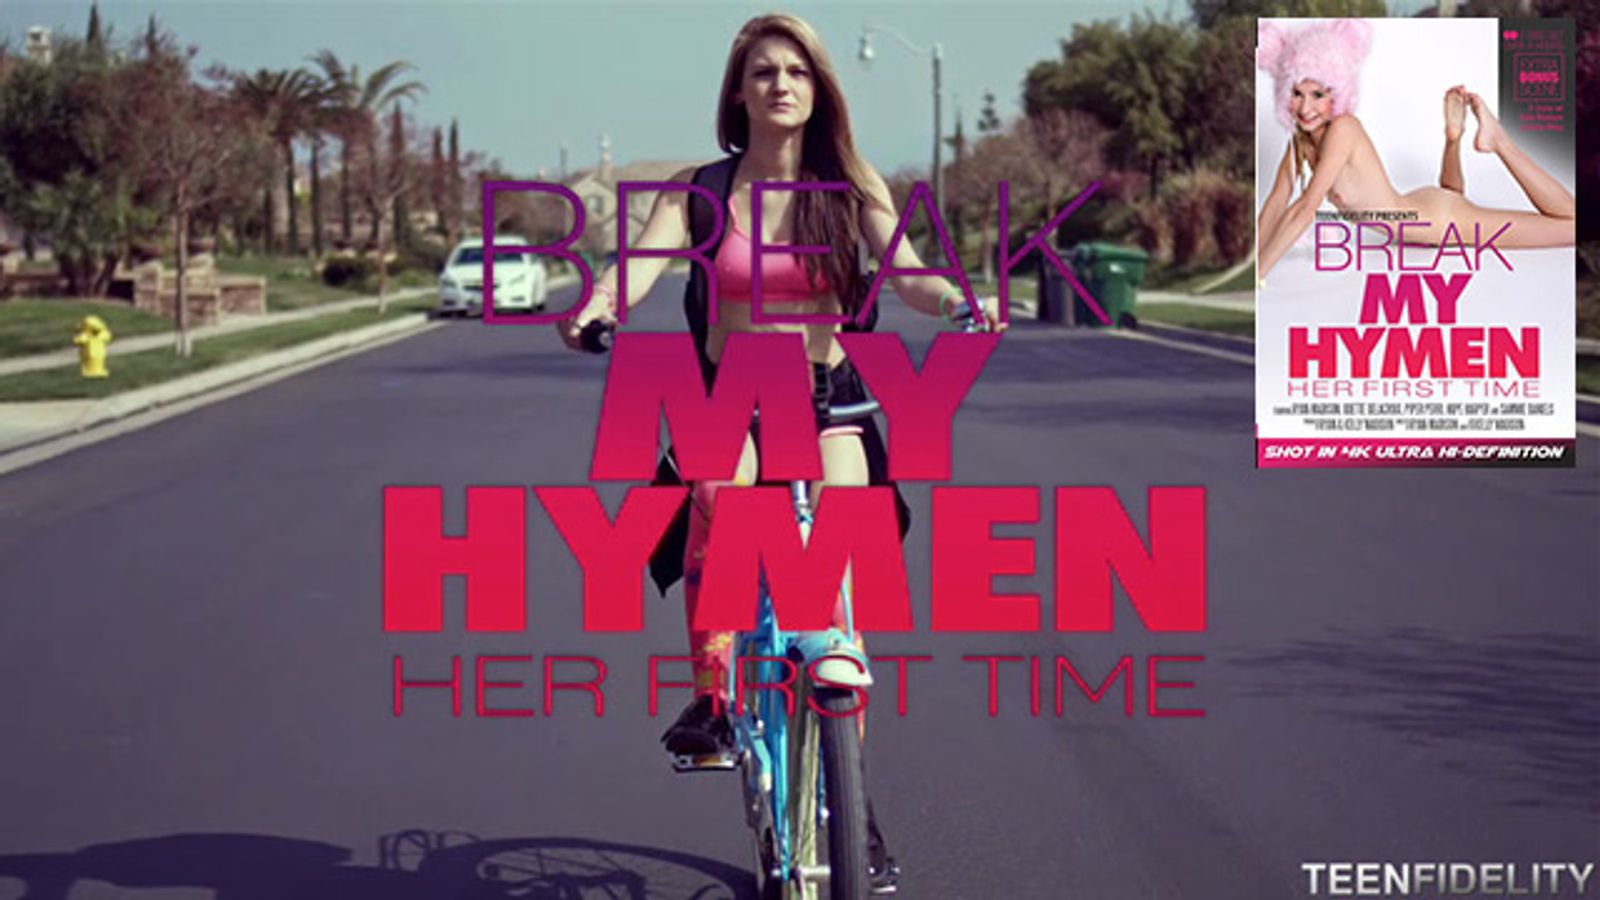 New 'Break My Hymen' Series Debuts From Kelly Madison Media